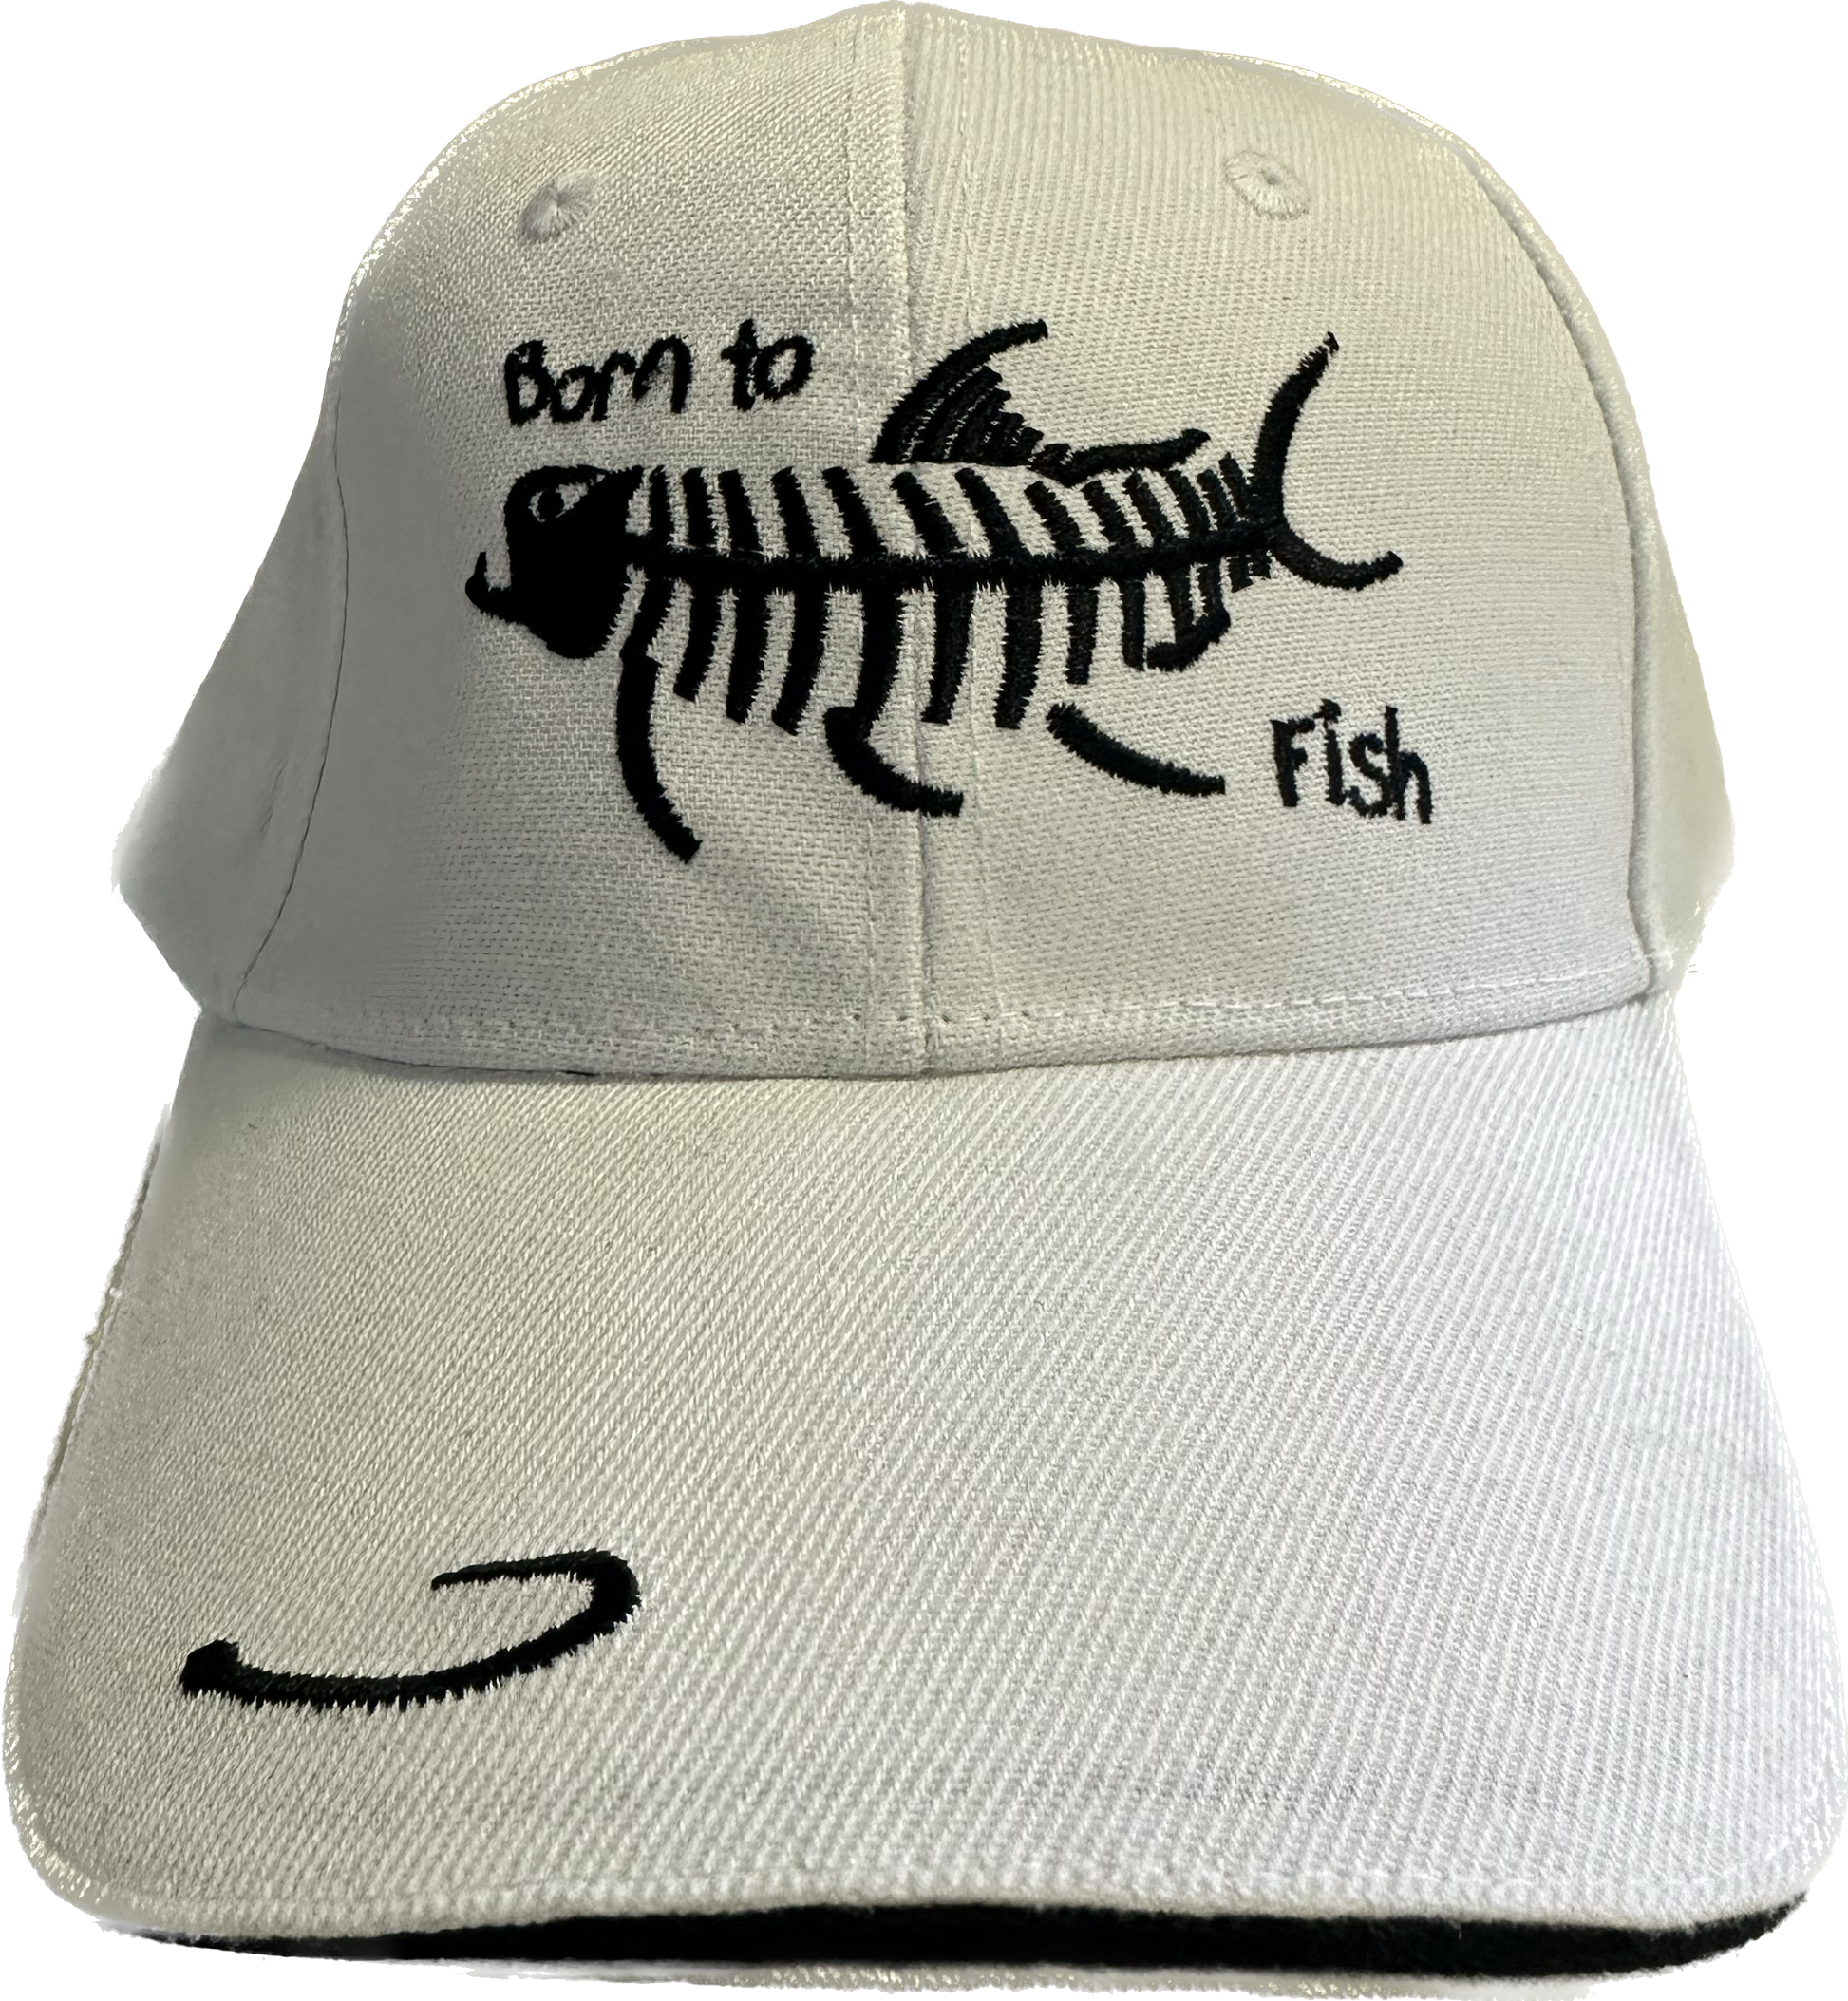 White Born To Fish Hat